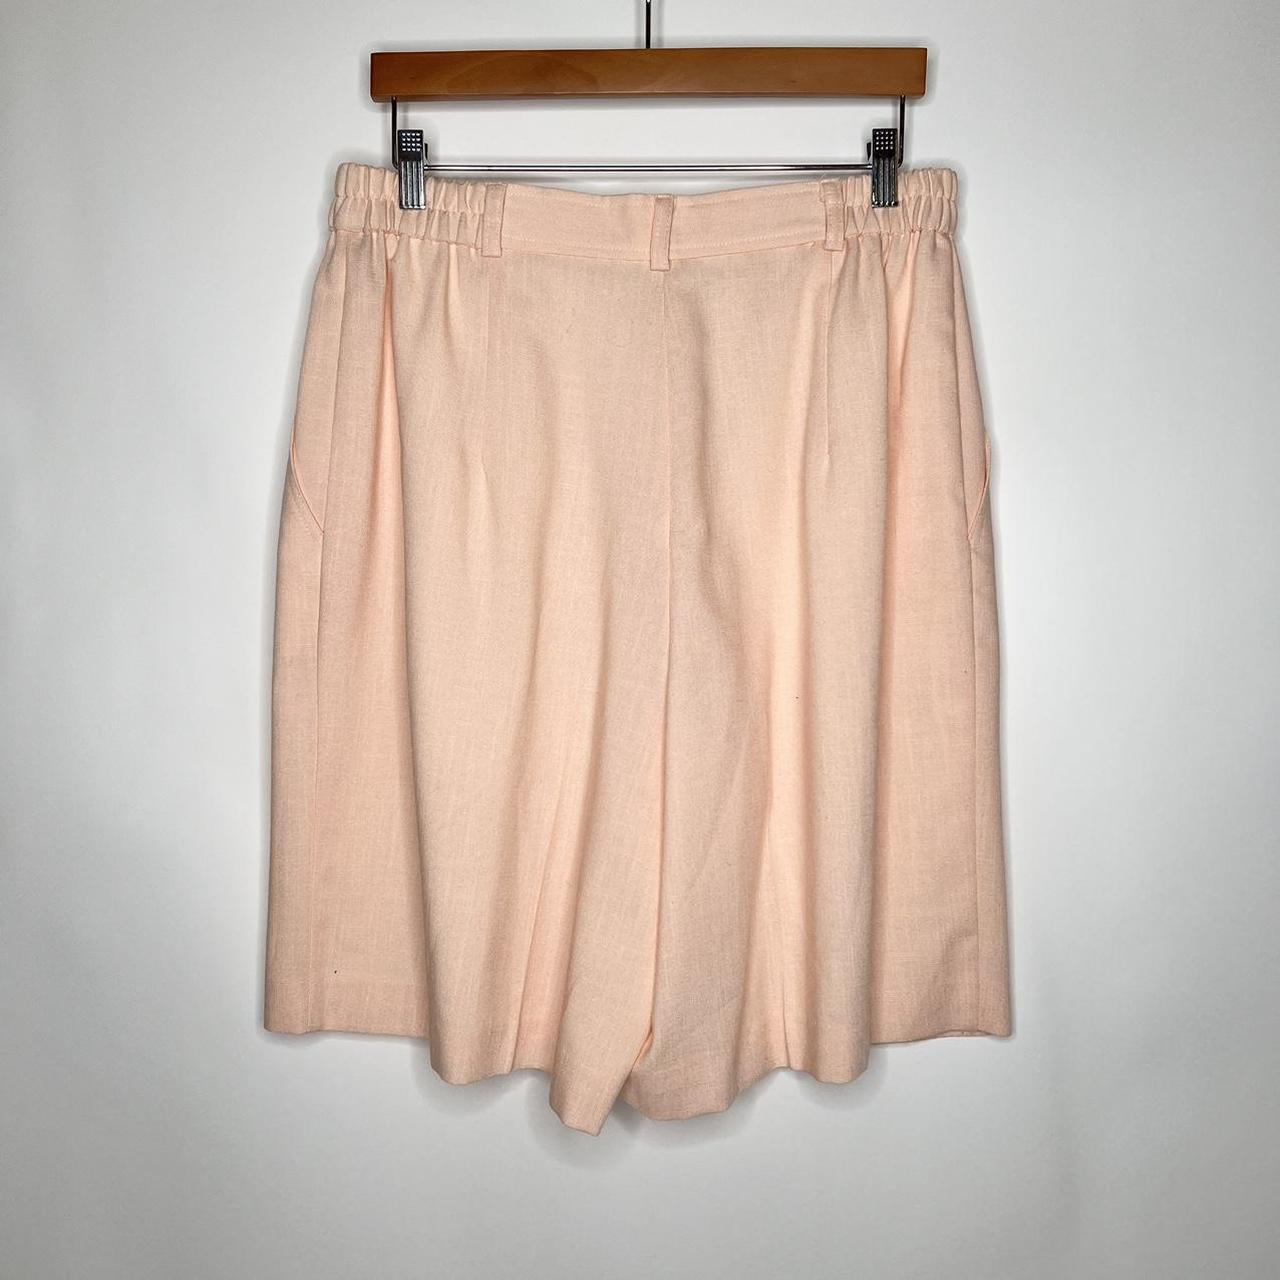 London Fog Women's Orange and Tan Shorts (2)